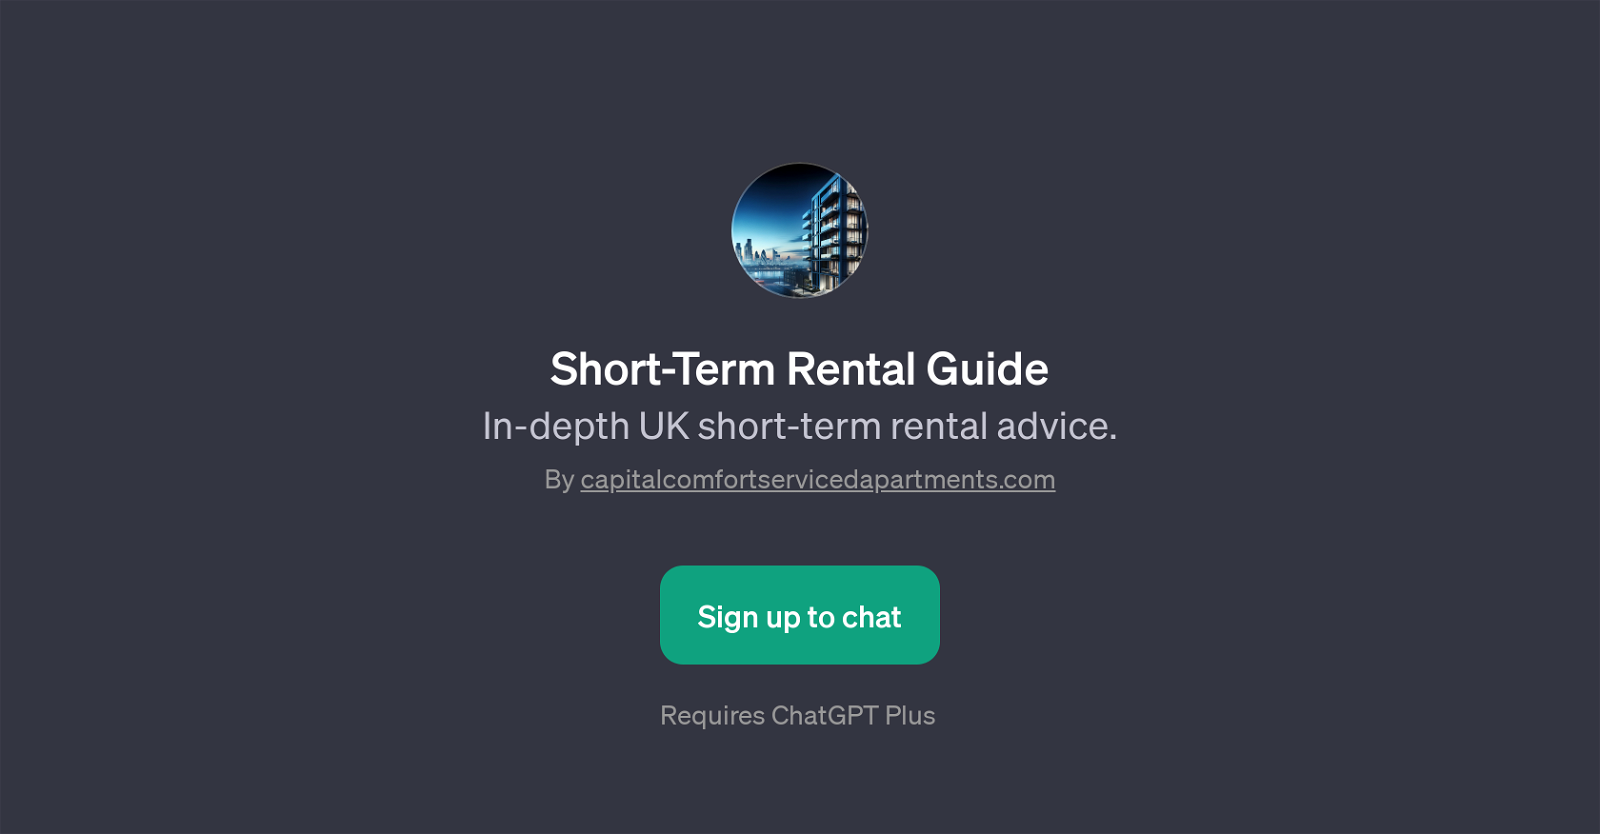 Short-Term Rental Guide website